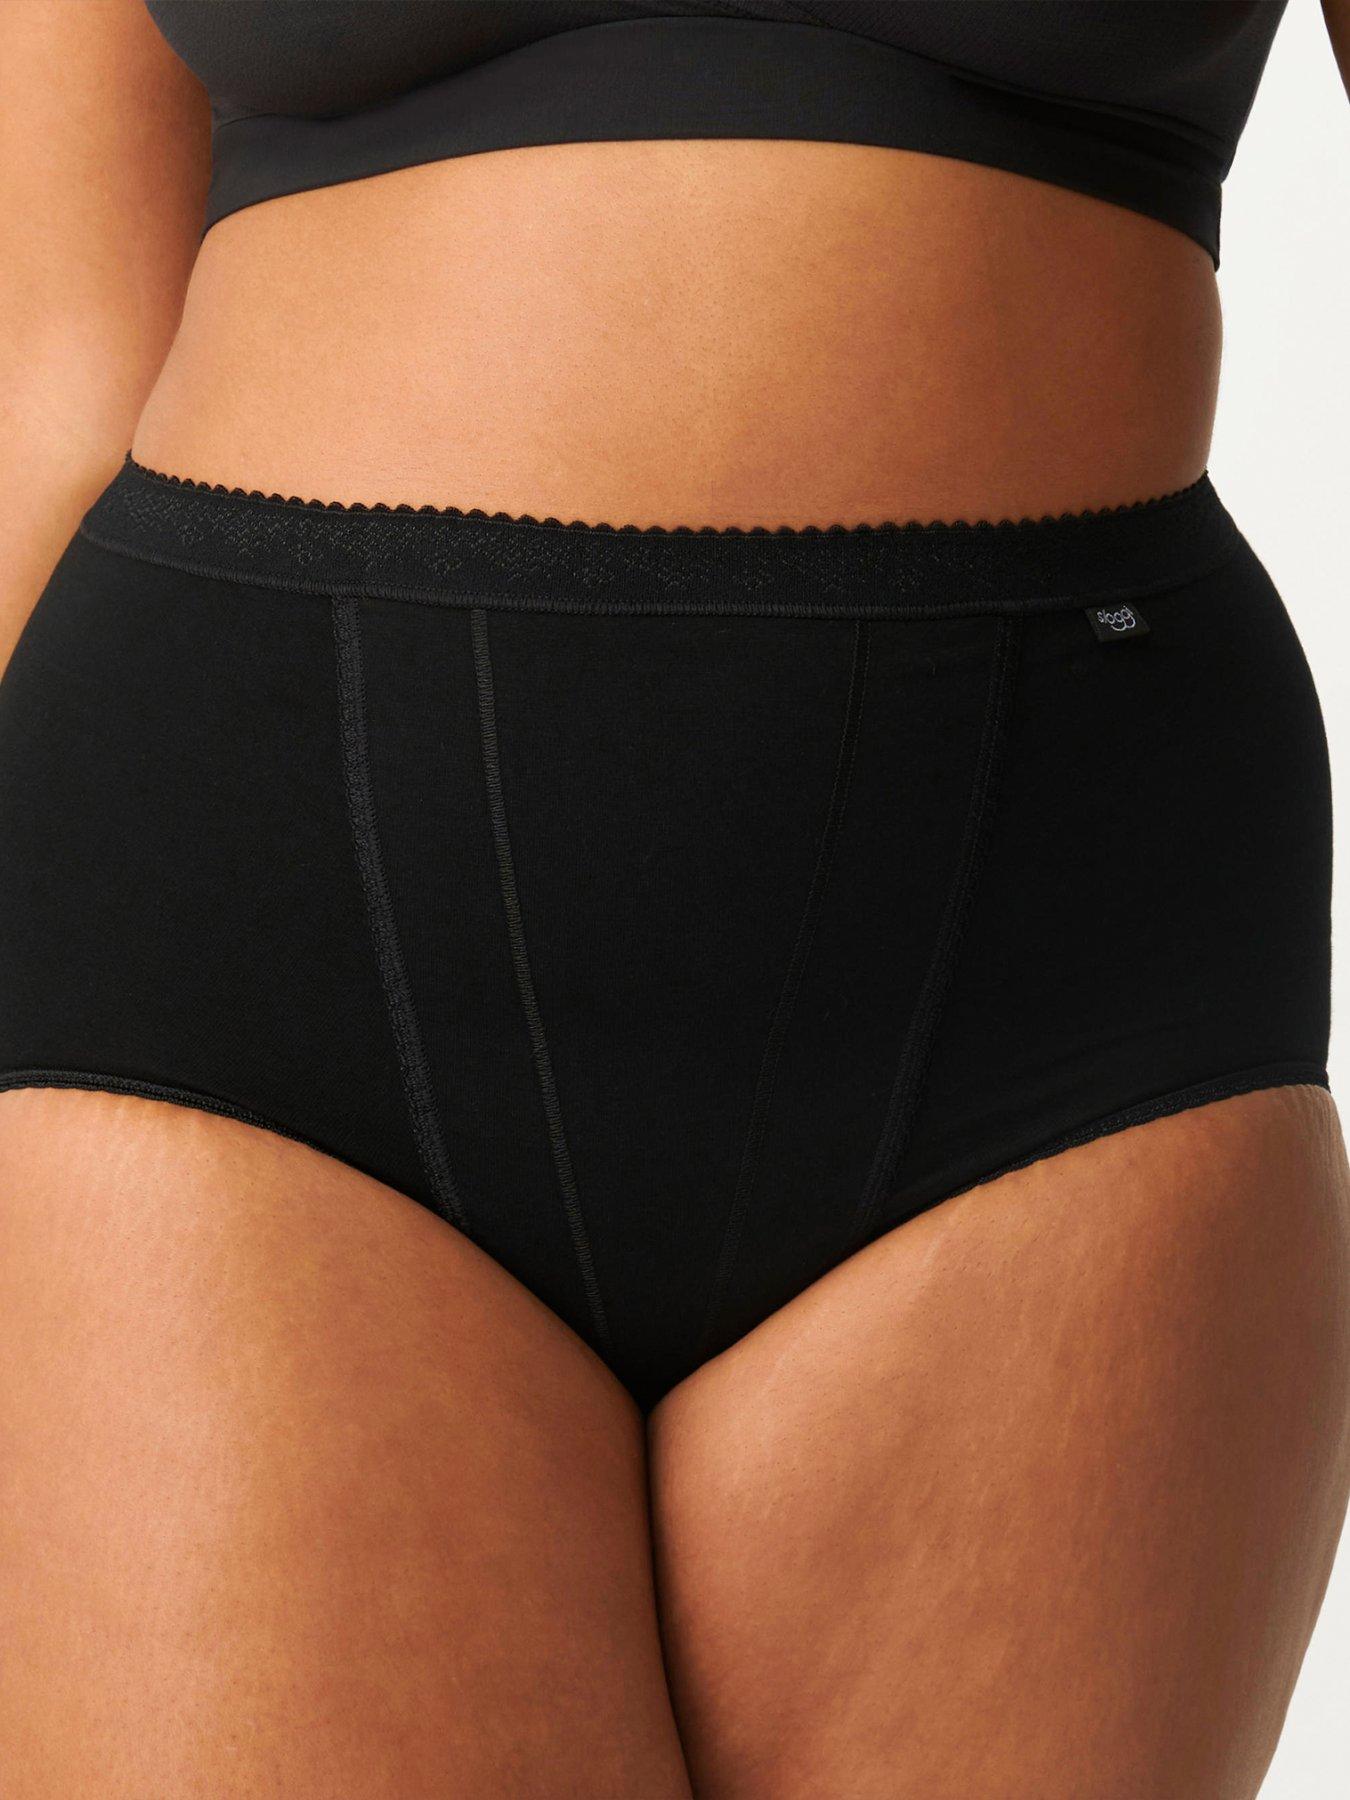 3pcs Ladies High Waist Knickers Women's Cotton Briefs Underwear Full Back  Coverage Panties Plus Size Multipack